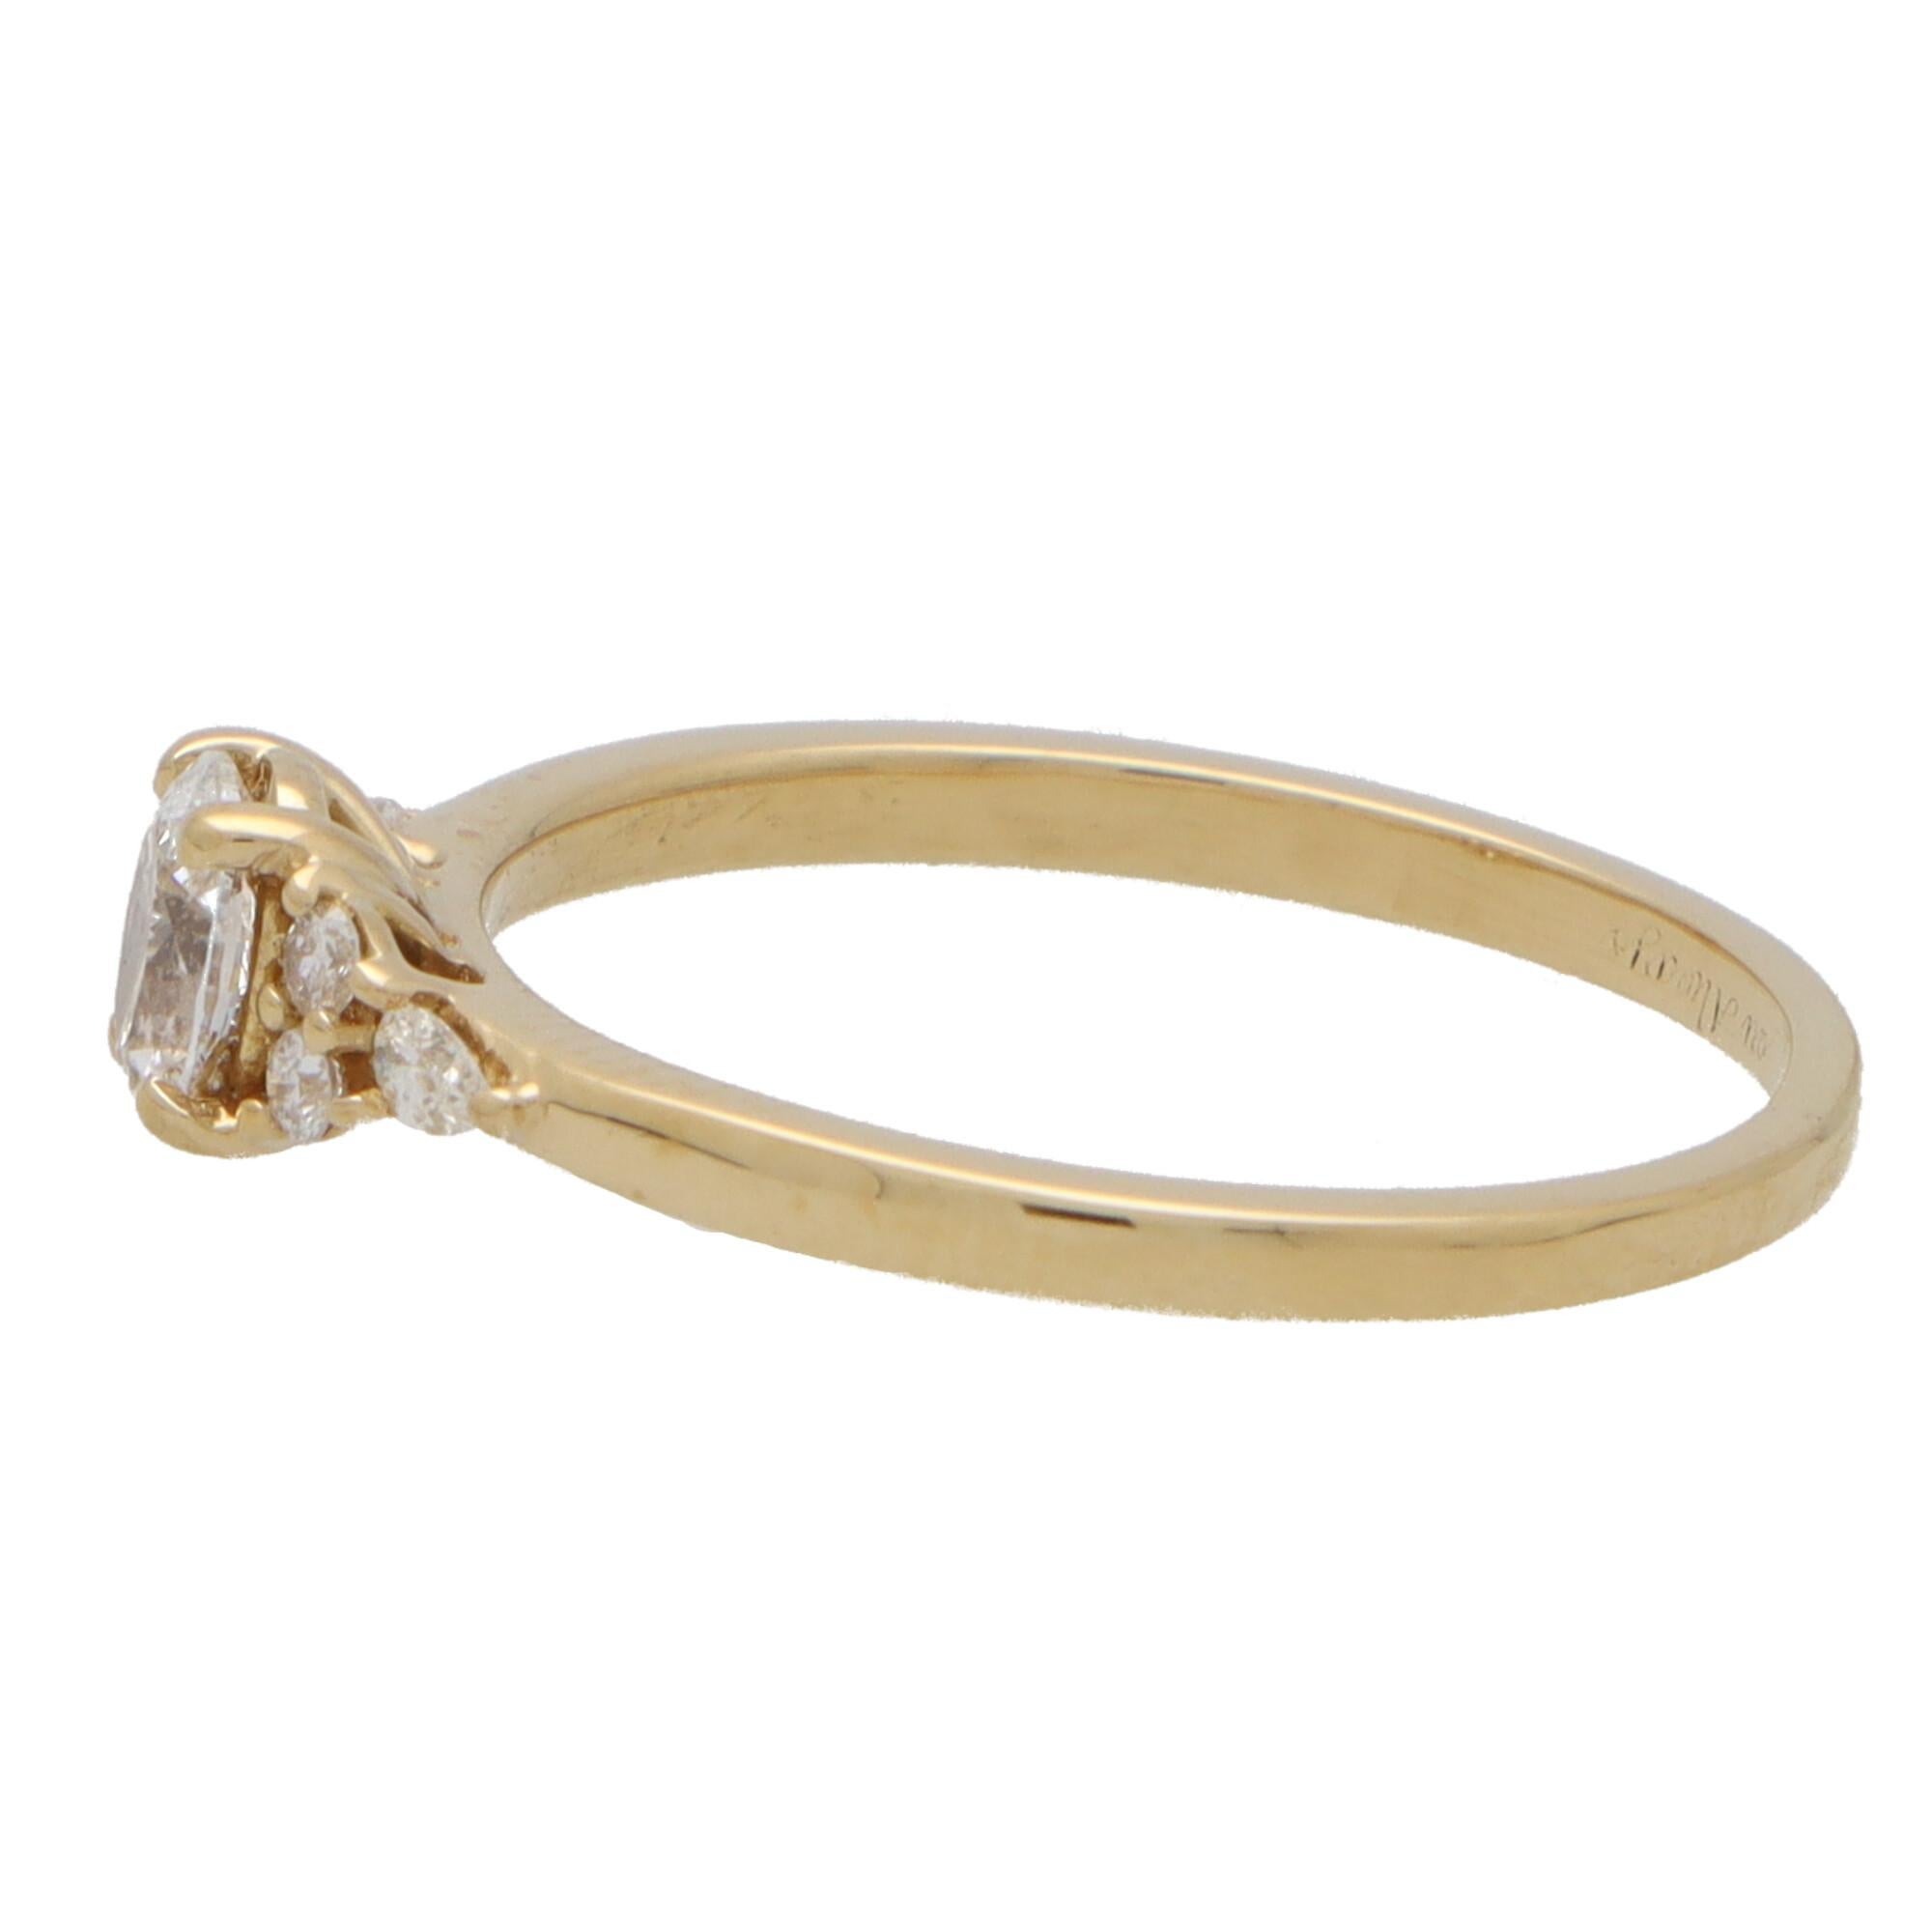 Women's or Men's Vintage GIA Certified Oval Cut Diamond Ring Set in 18k Yellow Gold